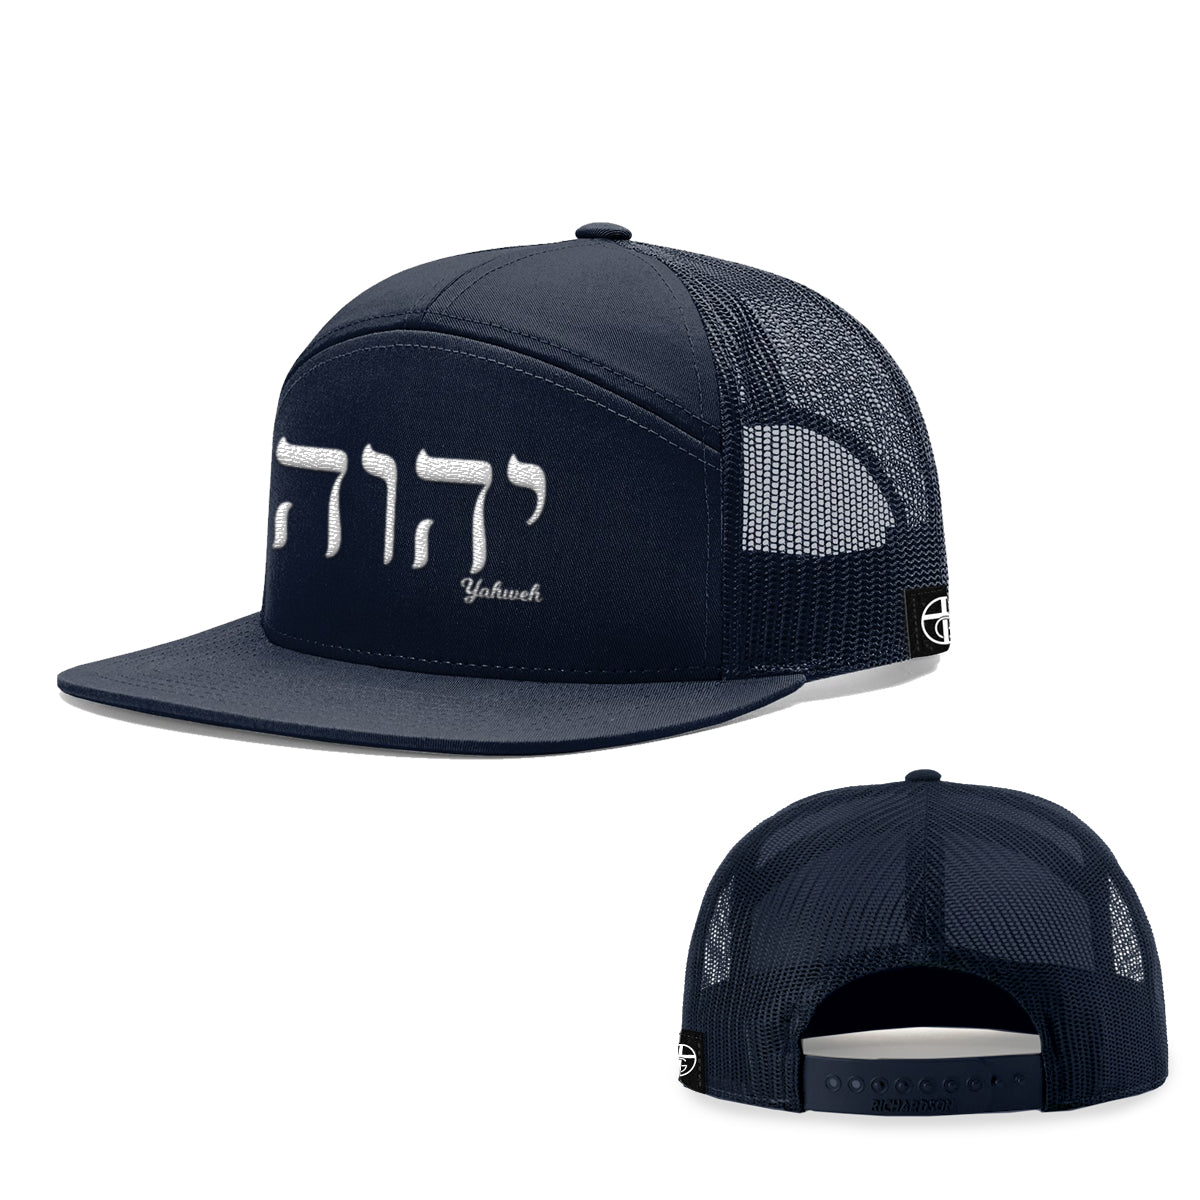 Yahweh 7 Panel Hats